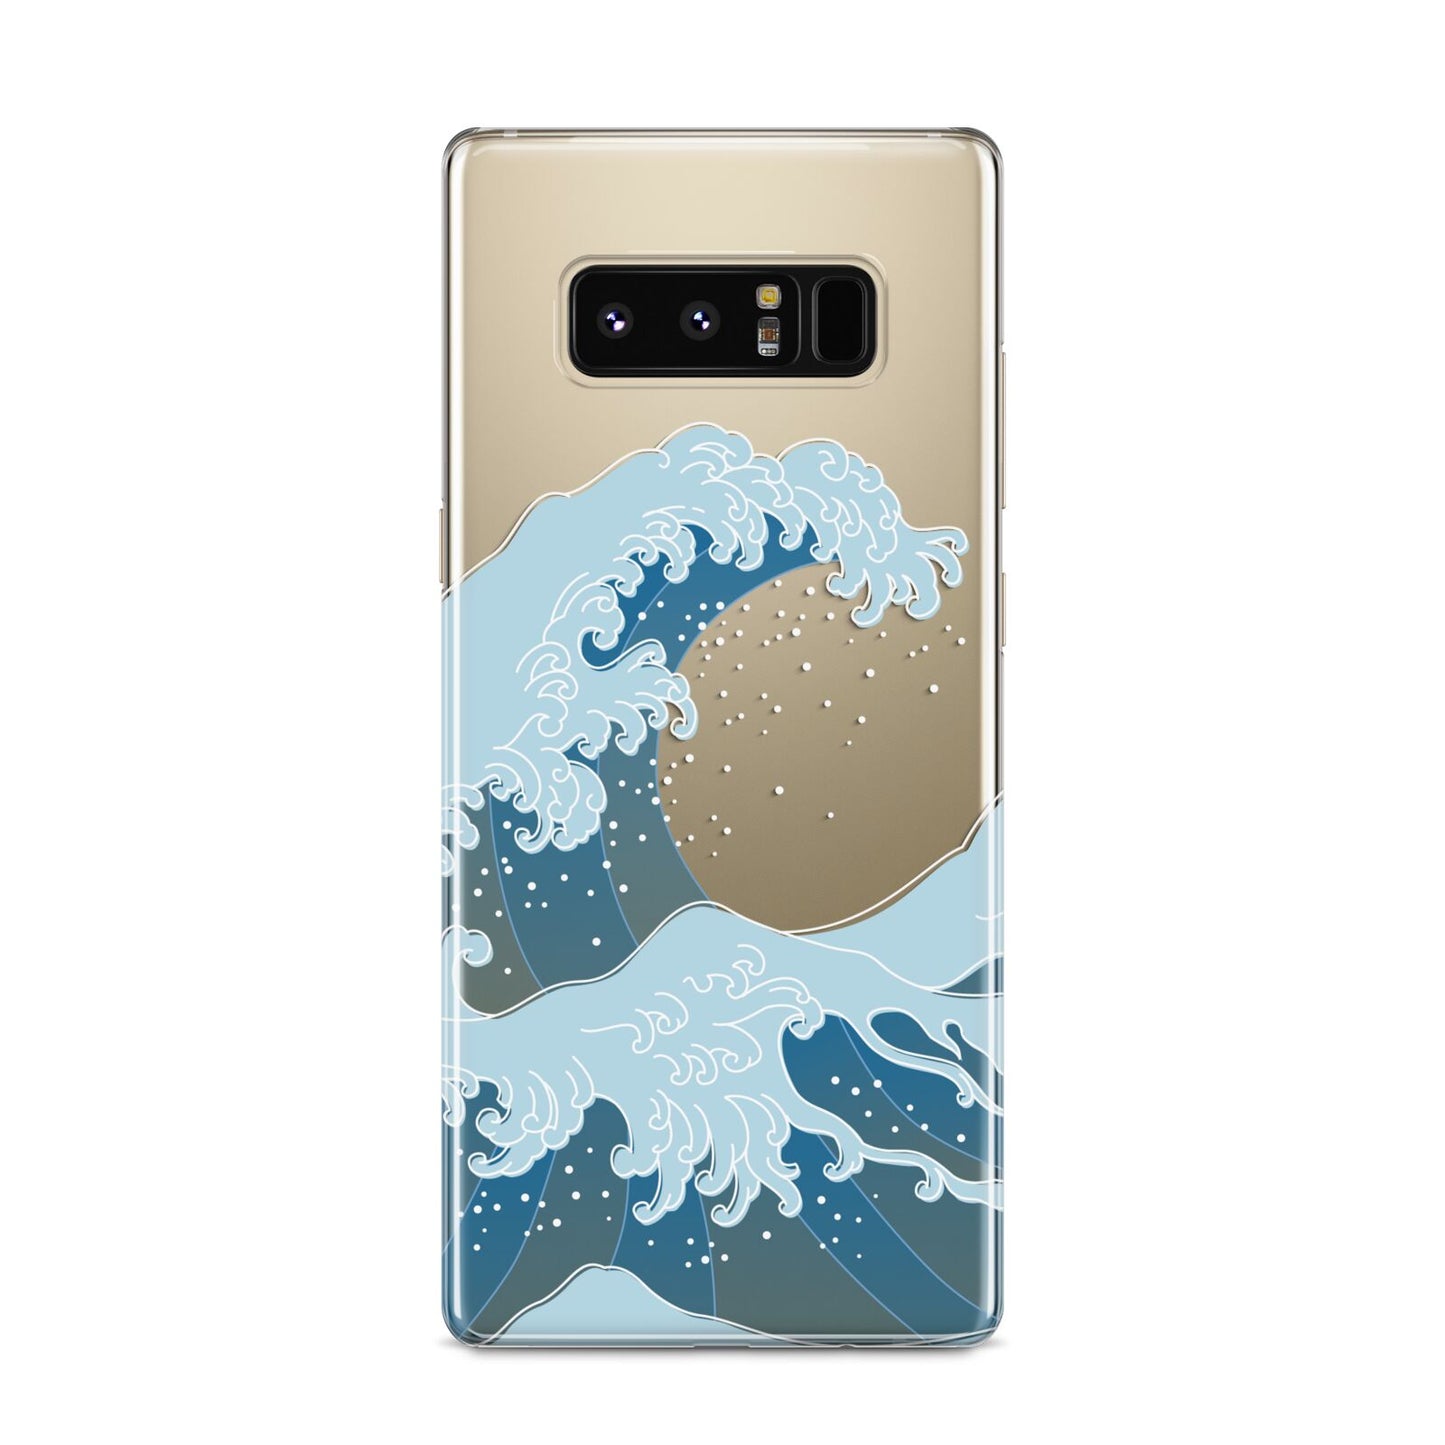 Great Wave Illustration Samsung Galaxy S8 Case